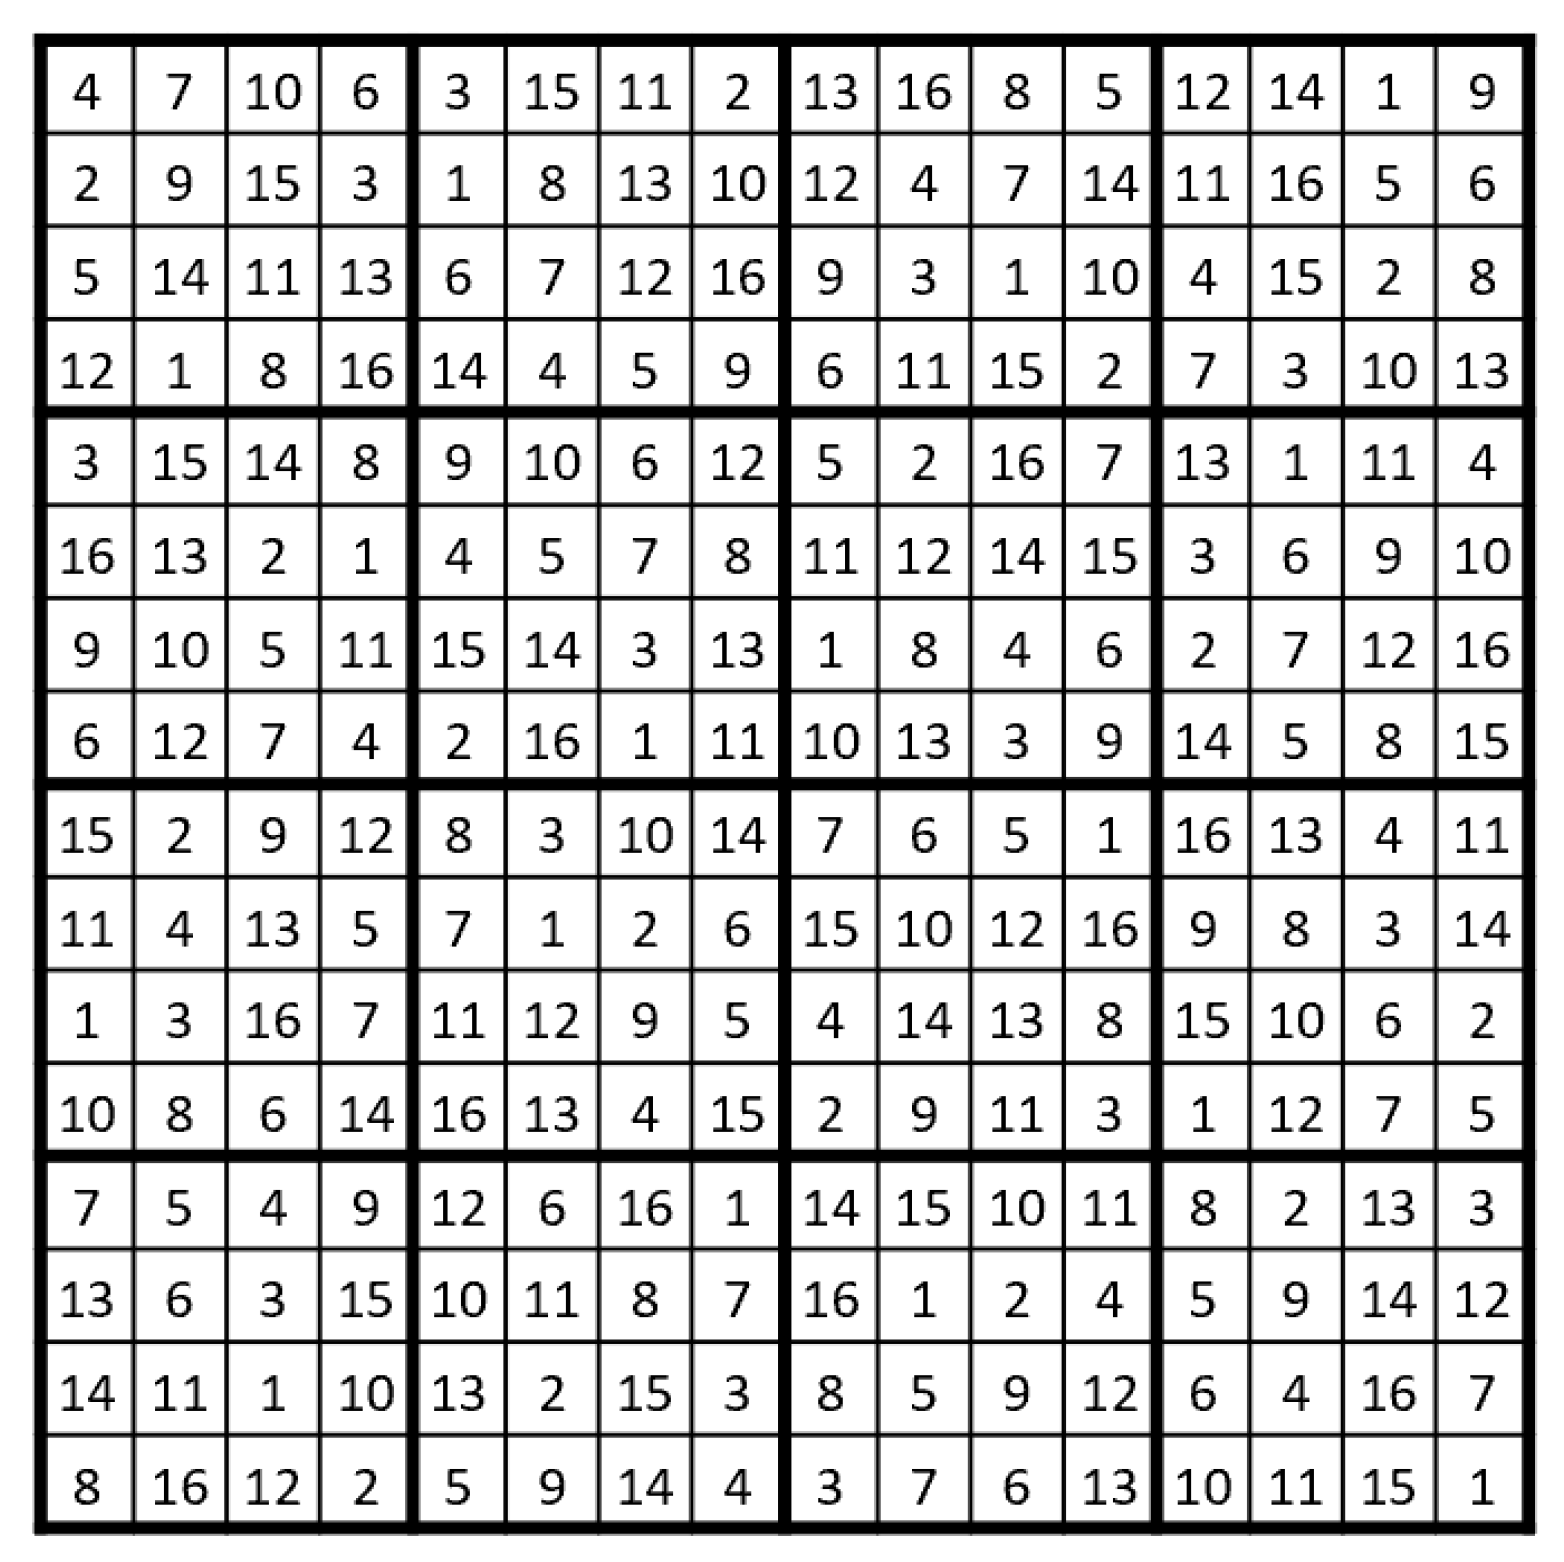 Symmetry | Free Full-Text | Research on Image Steganography Based on Sudoku  Matrix | HTML